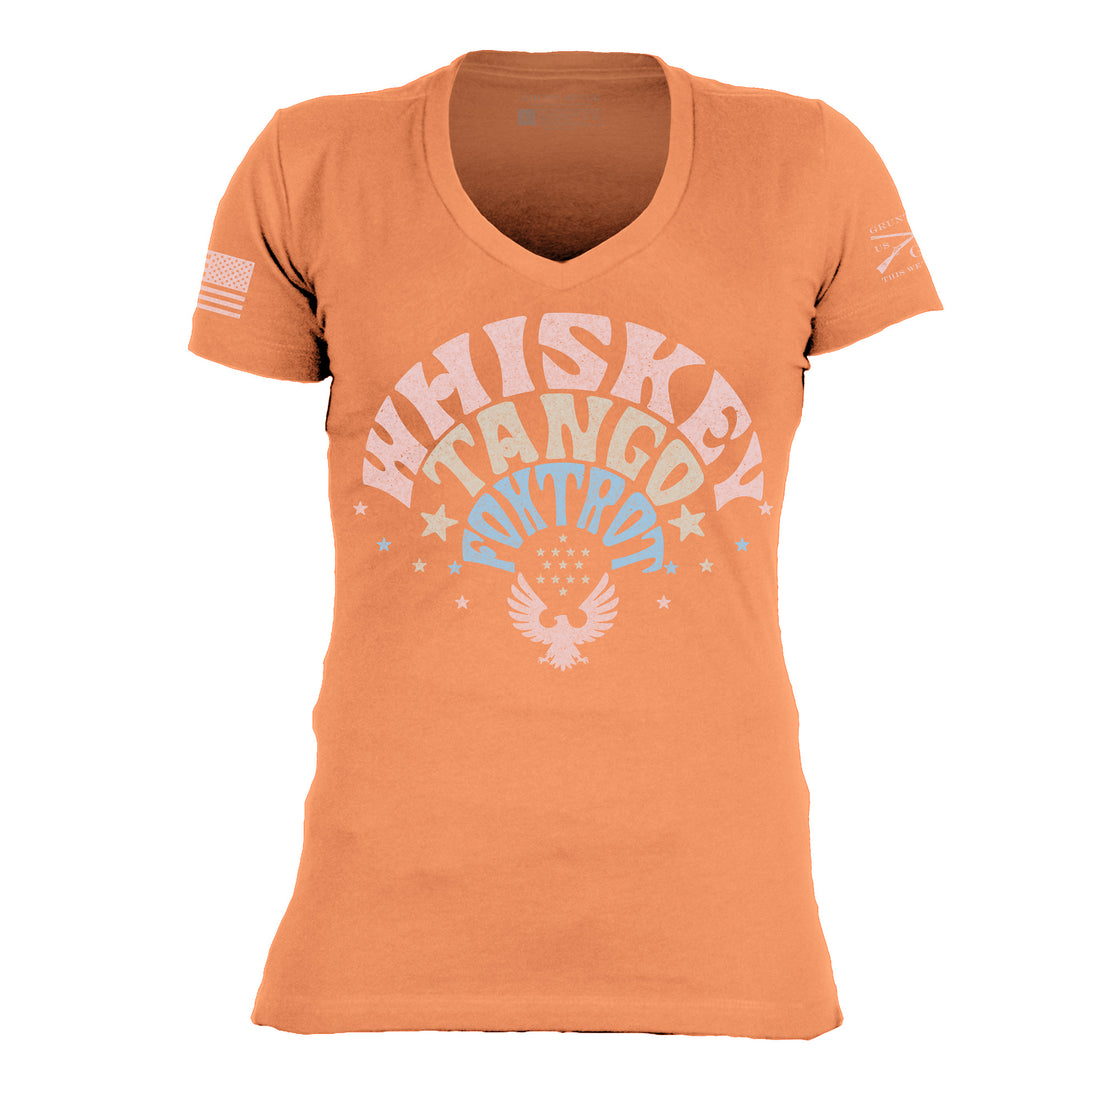 Whiskey Tango Foxtrot Shirt for Women 